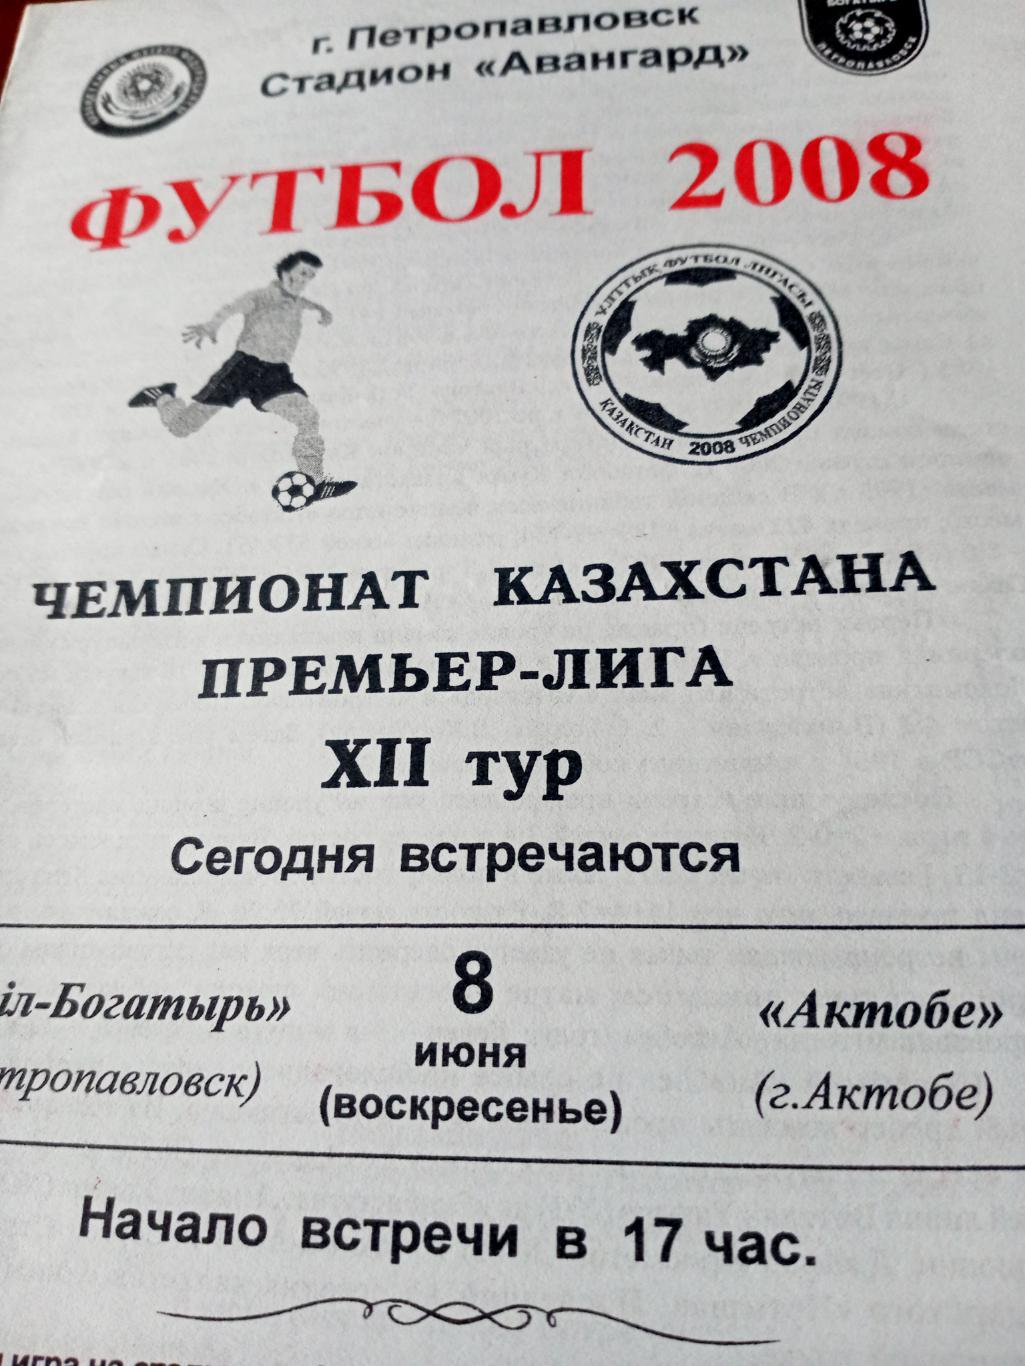 Есиль-Богатырь Петропавловск - ФК Актобе. 8 июня 2008 год